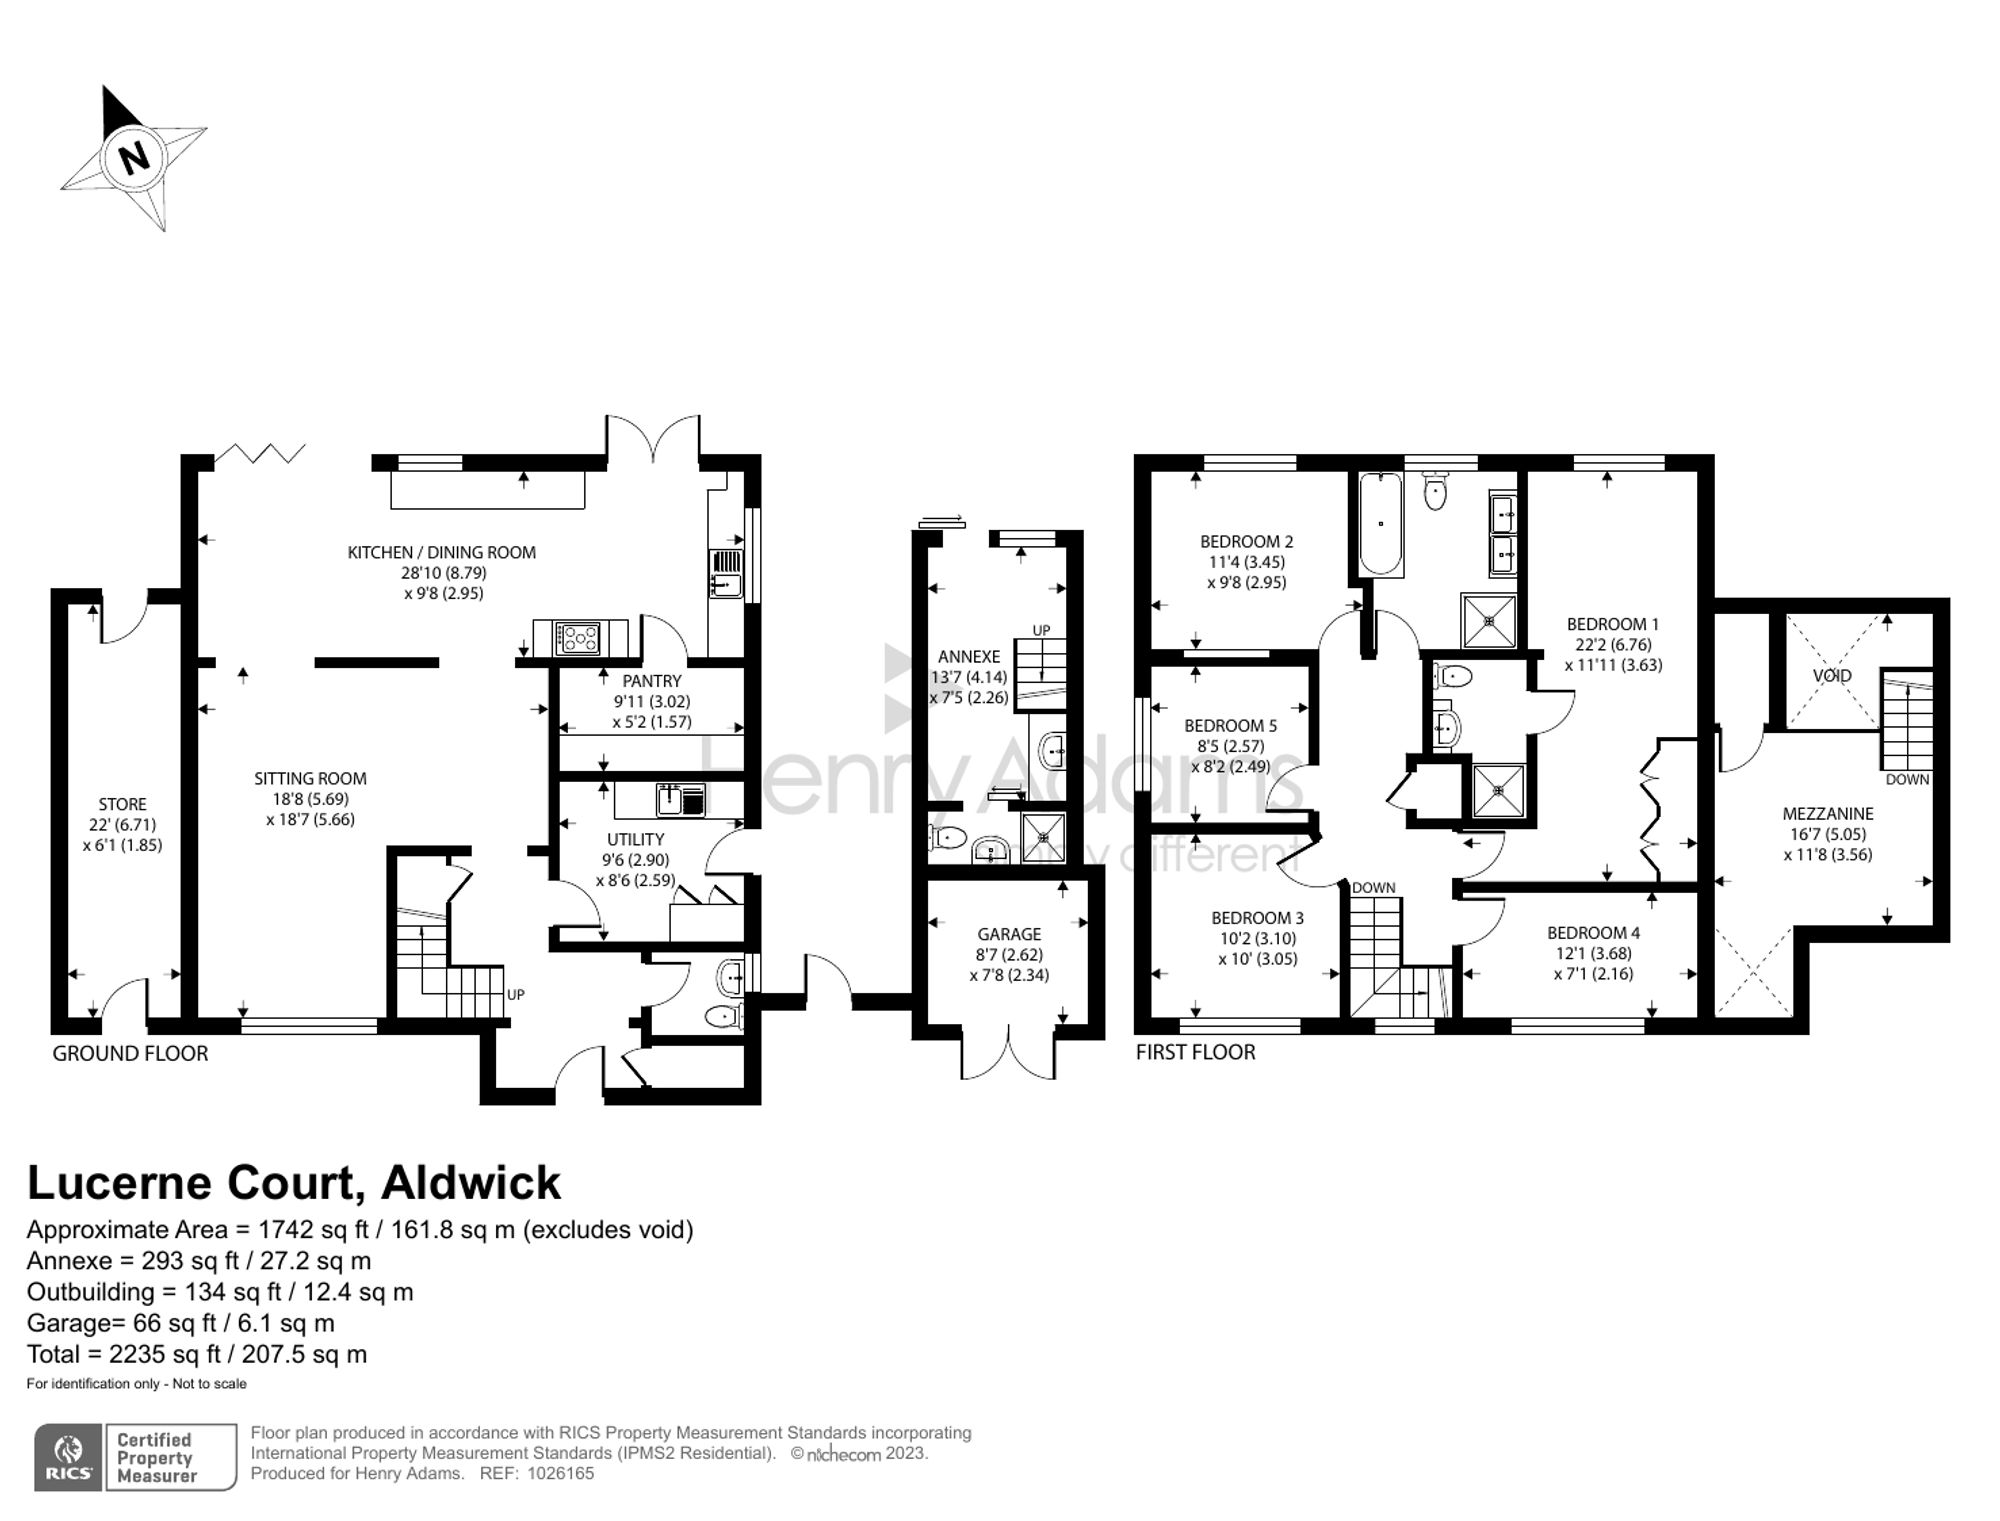 Lucerne Court, Aldwick floorplans